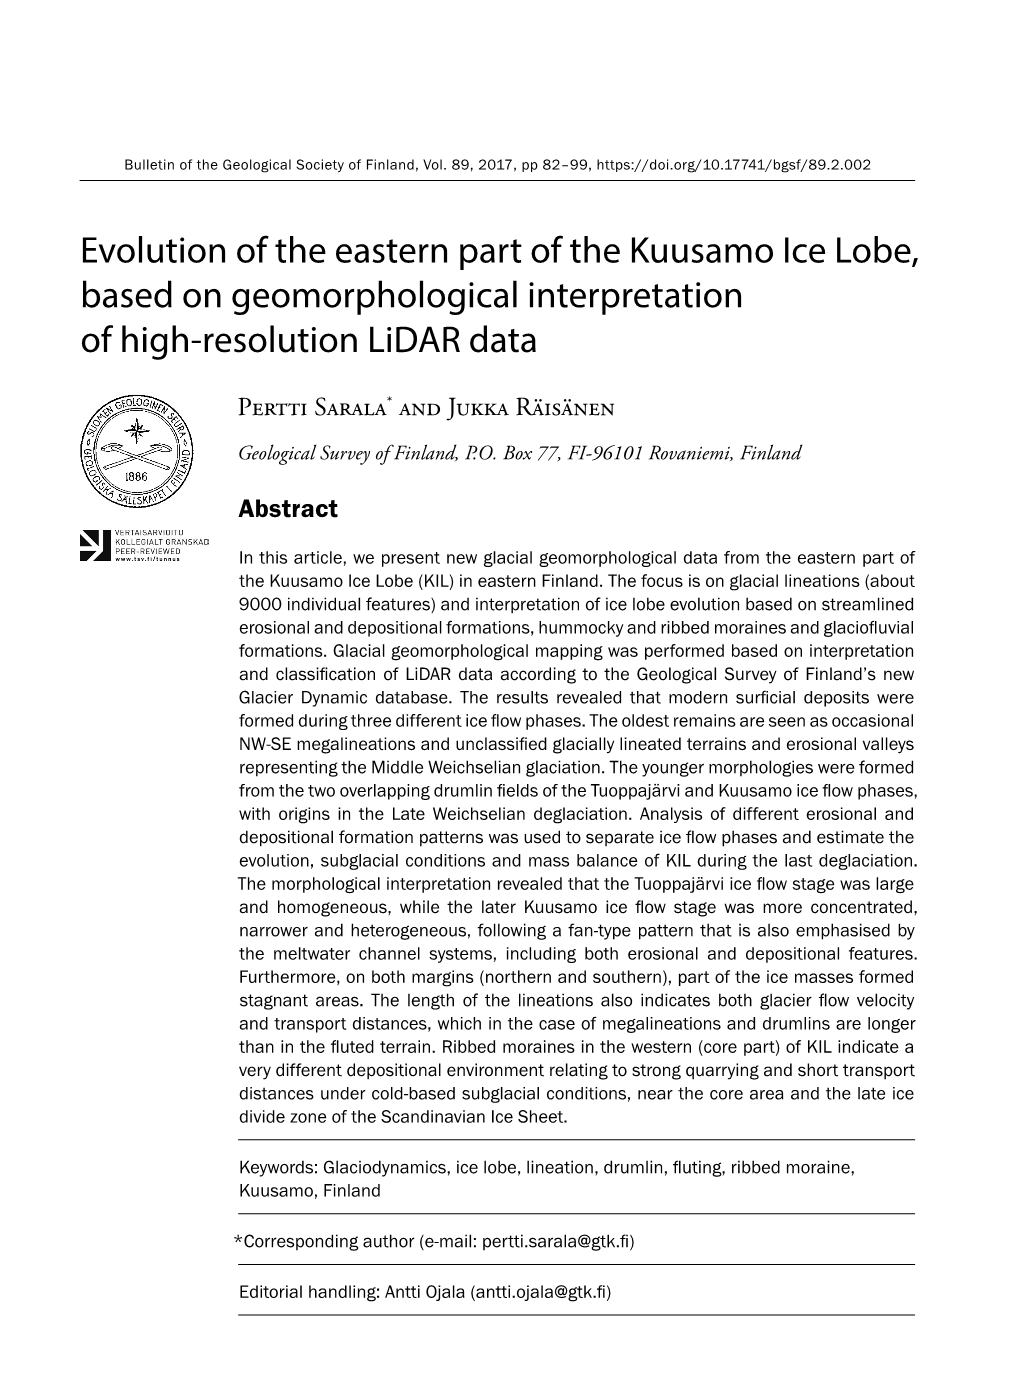 Evolution of the Eastern Part of the Kuusamo Ice Lobe, Based on Geomorphological Interpretation of High-Resolution Lidar Data